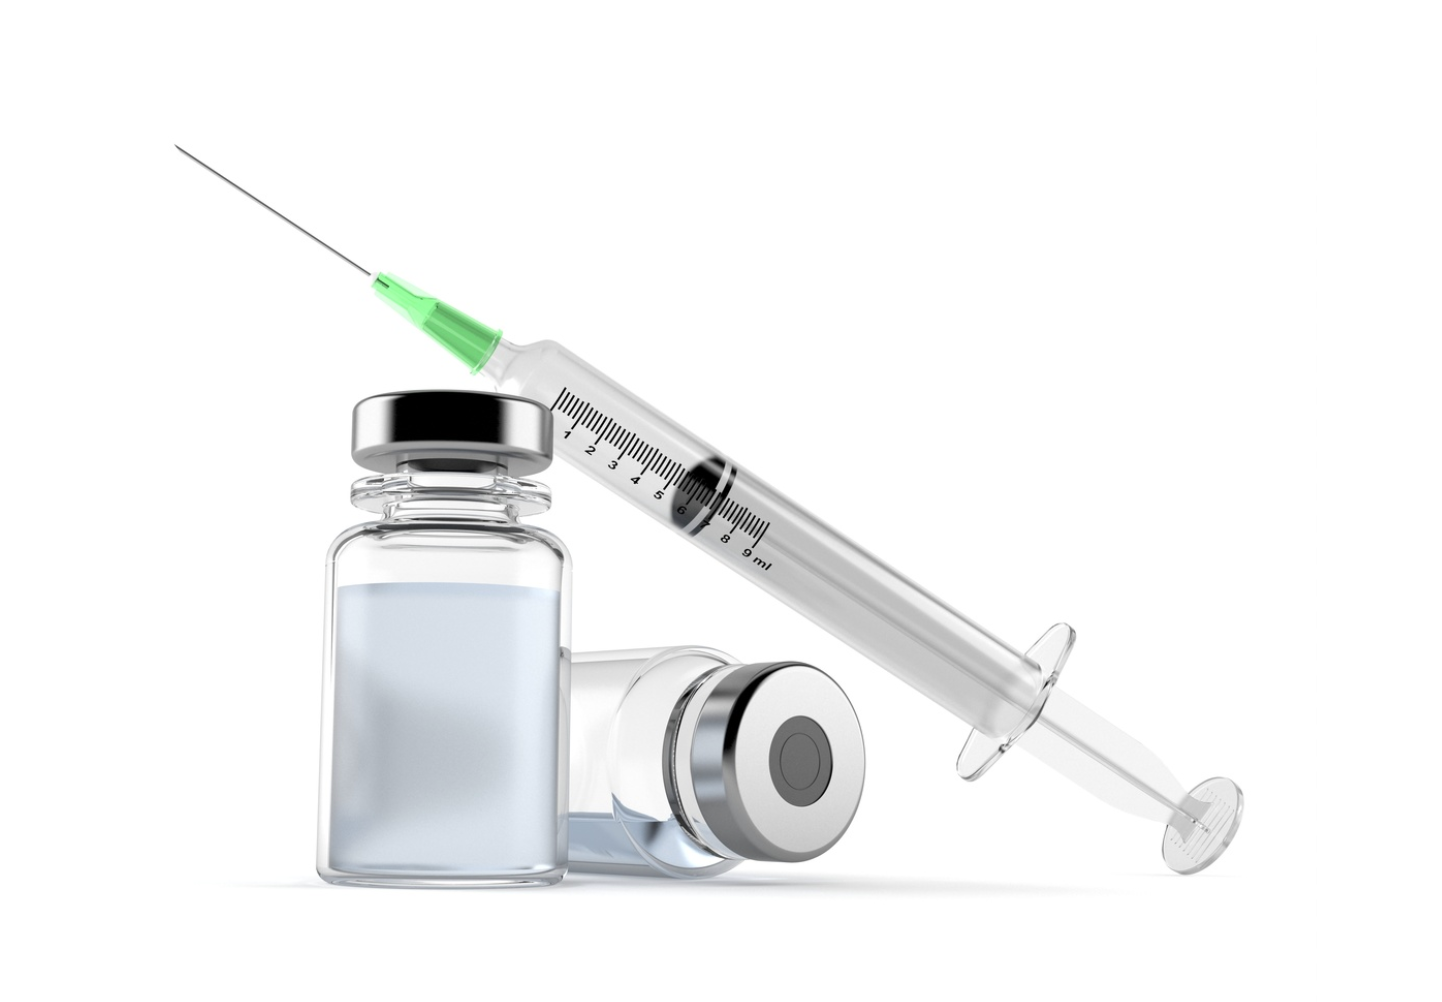 Fluzone High-Dose Quadrivalent, Flublok Quadrivalent, Fluzone Quadrivalent Vaccines Receive FDA Approval for 2022-2023 Flu Season